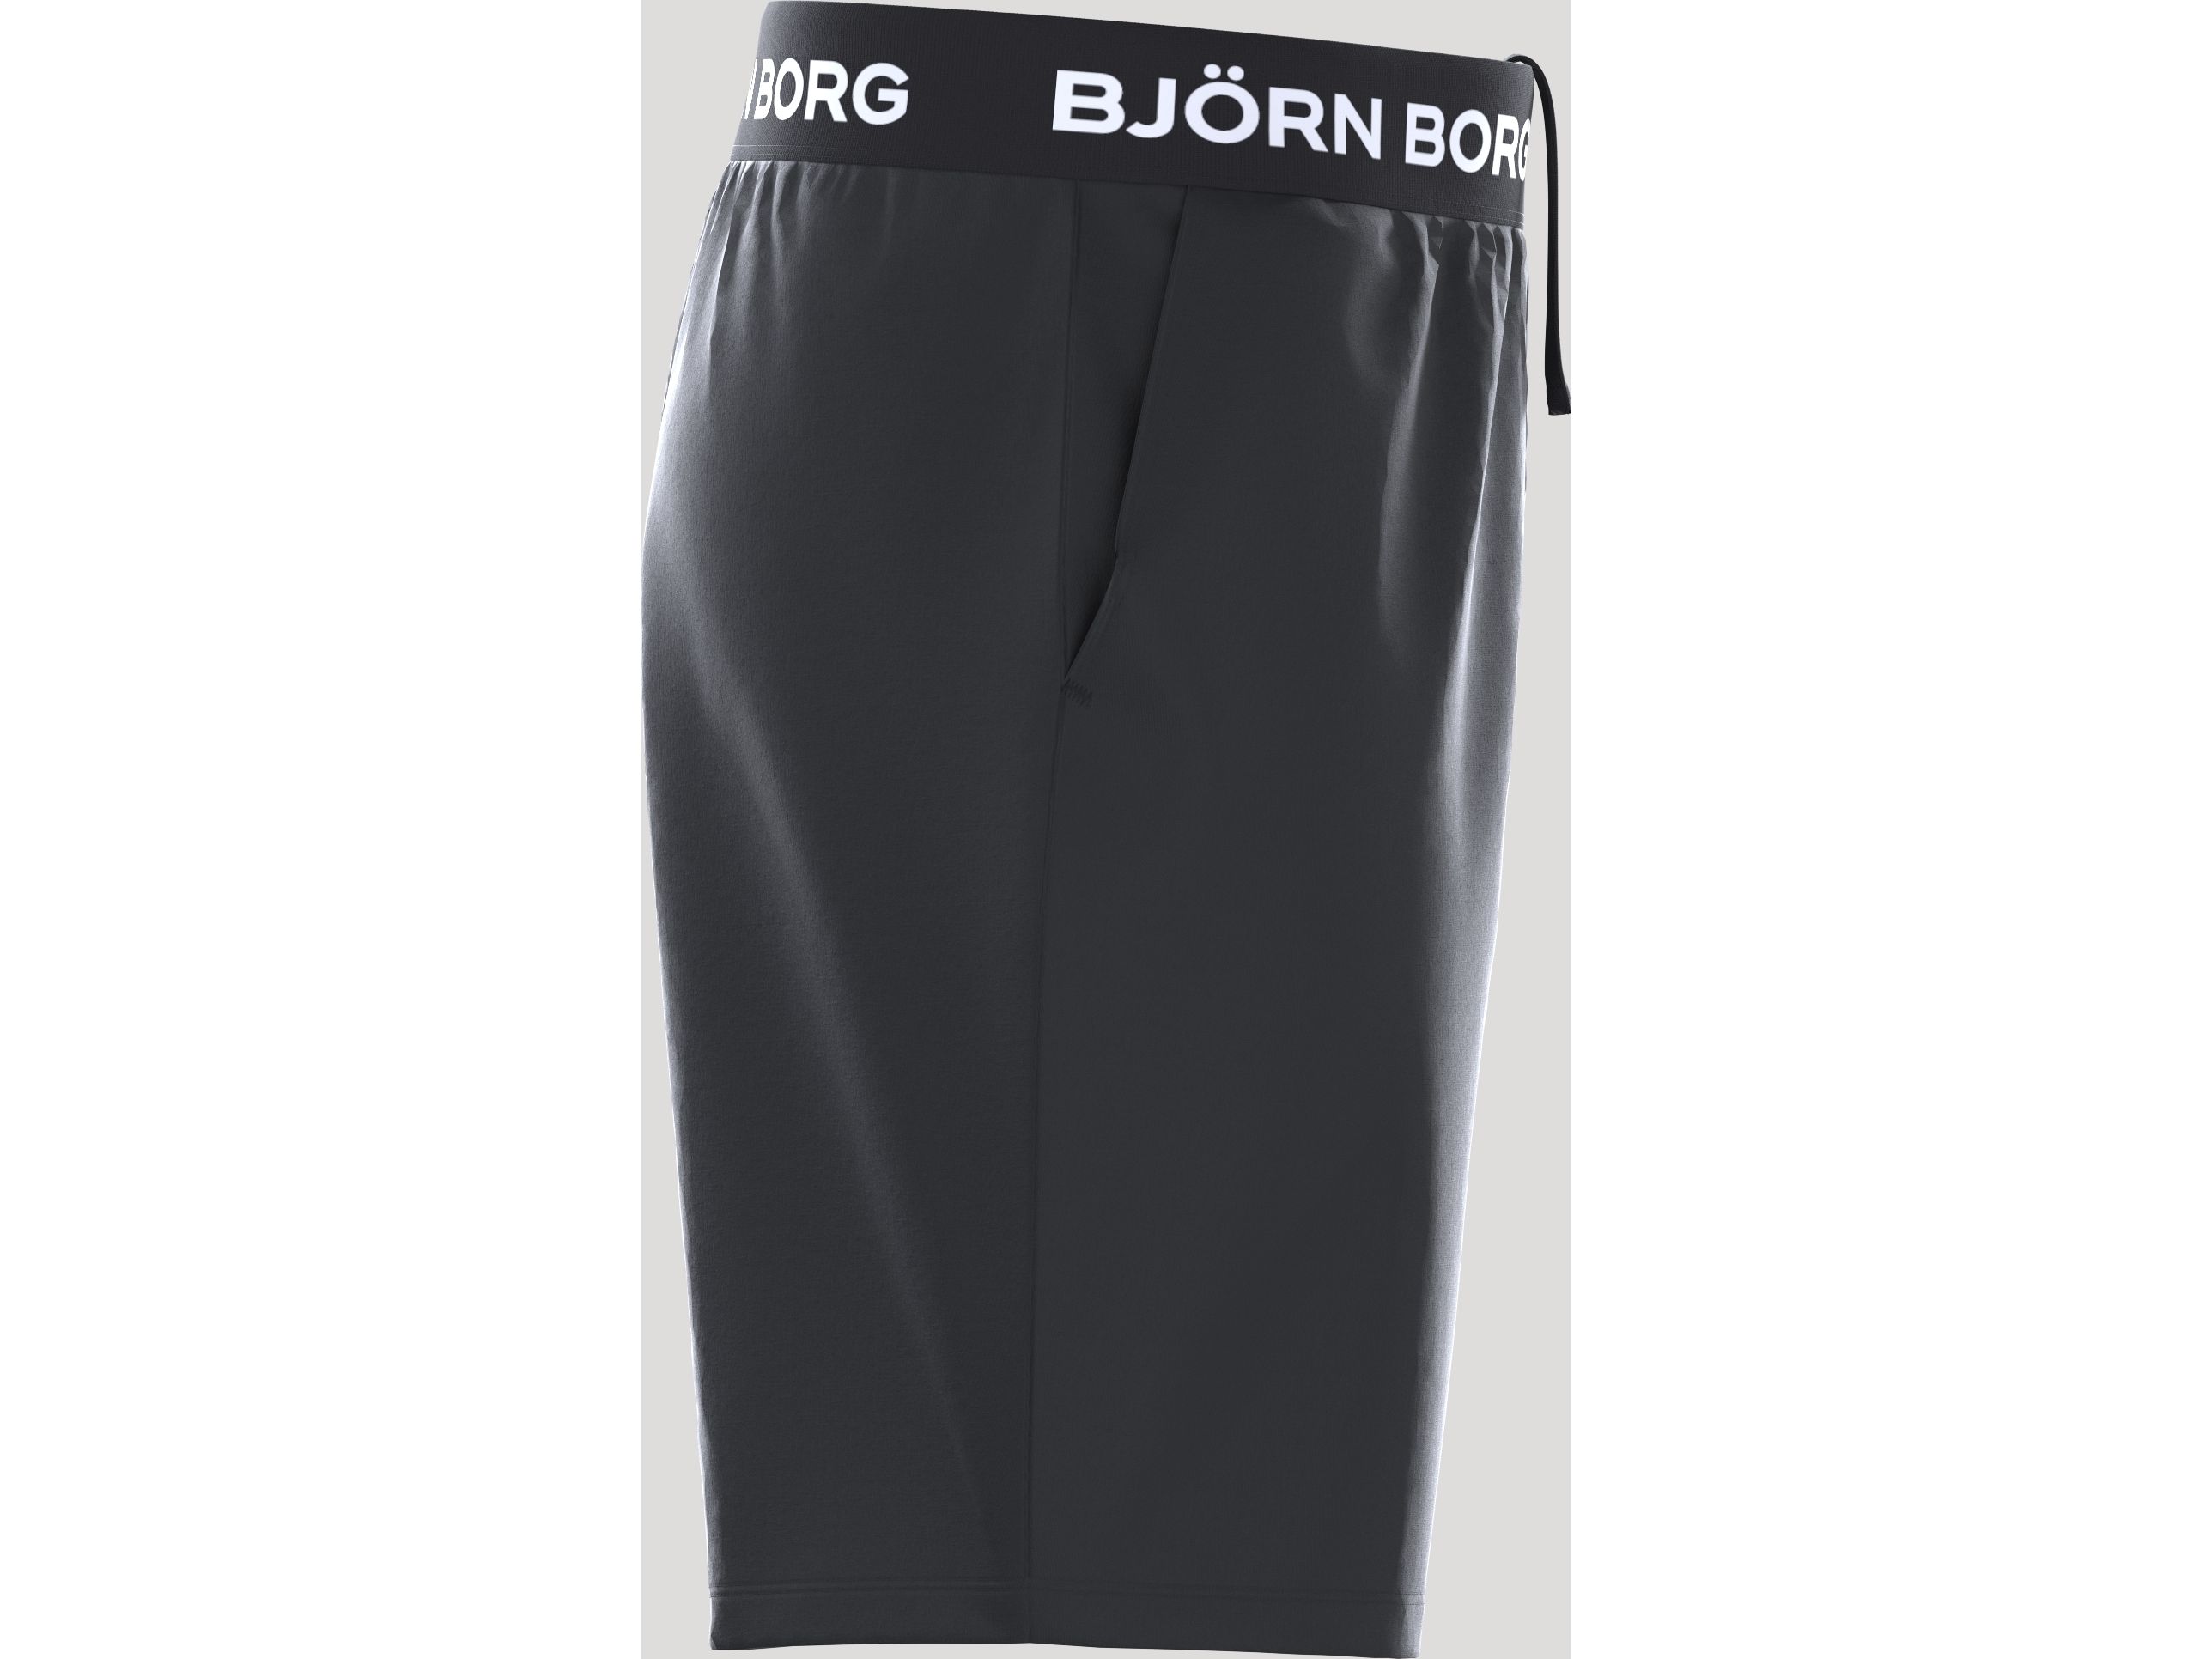 bjorn-borg-logo-active-short